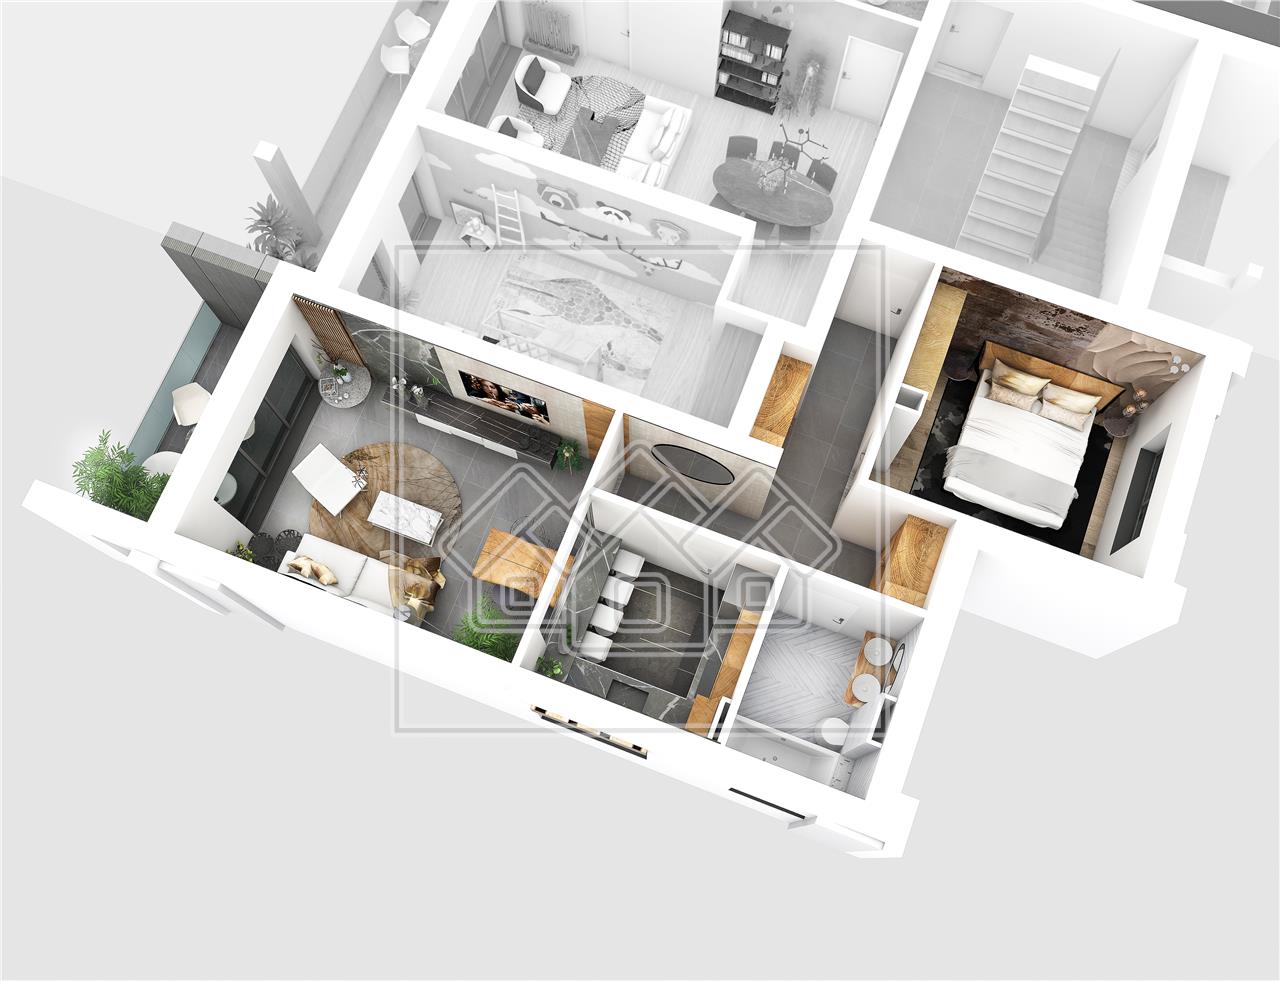 2-room apartment luxury concept, with underfloor heating